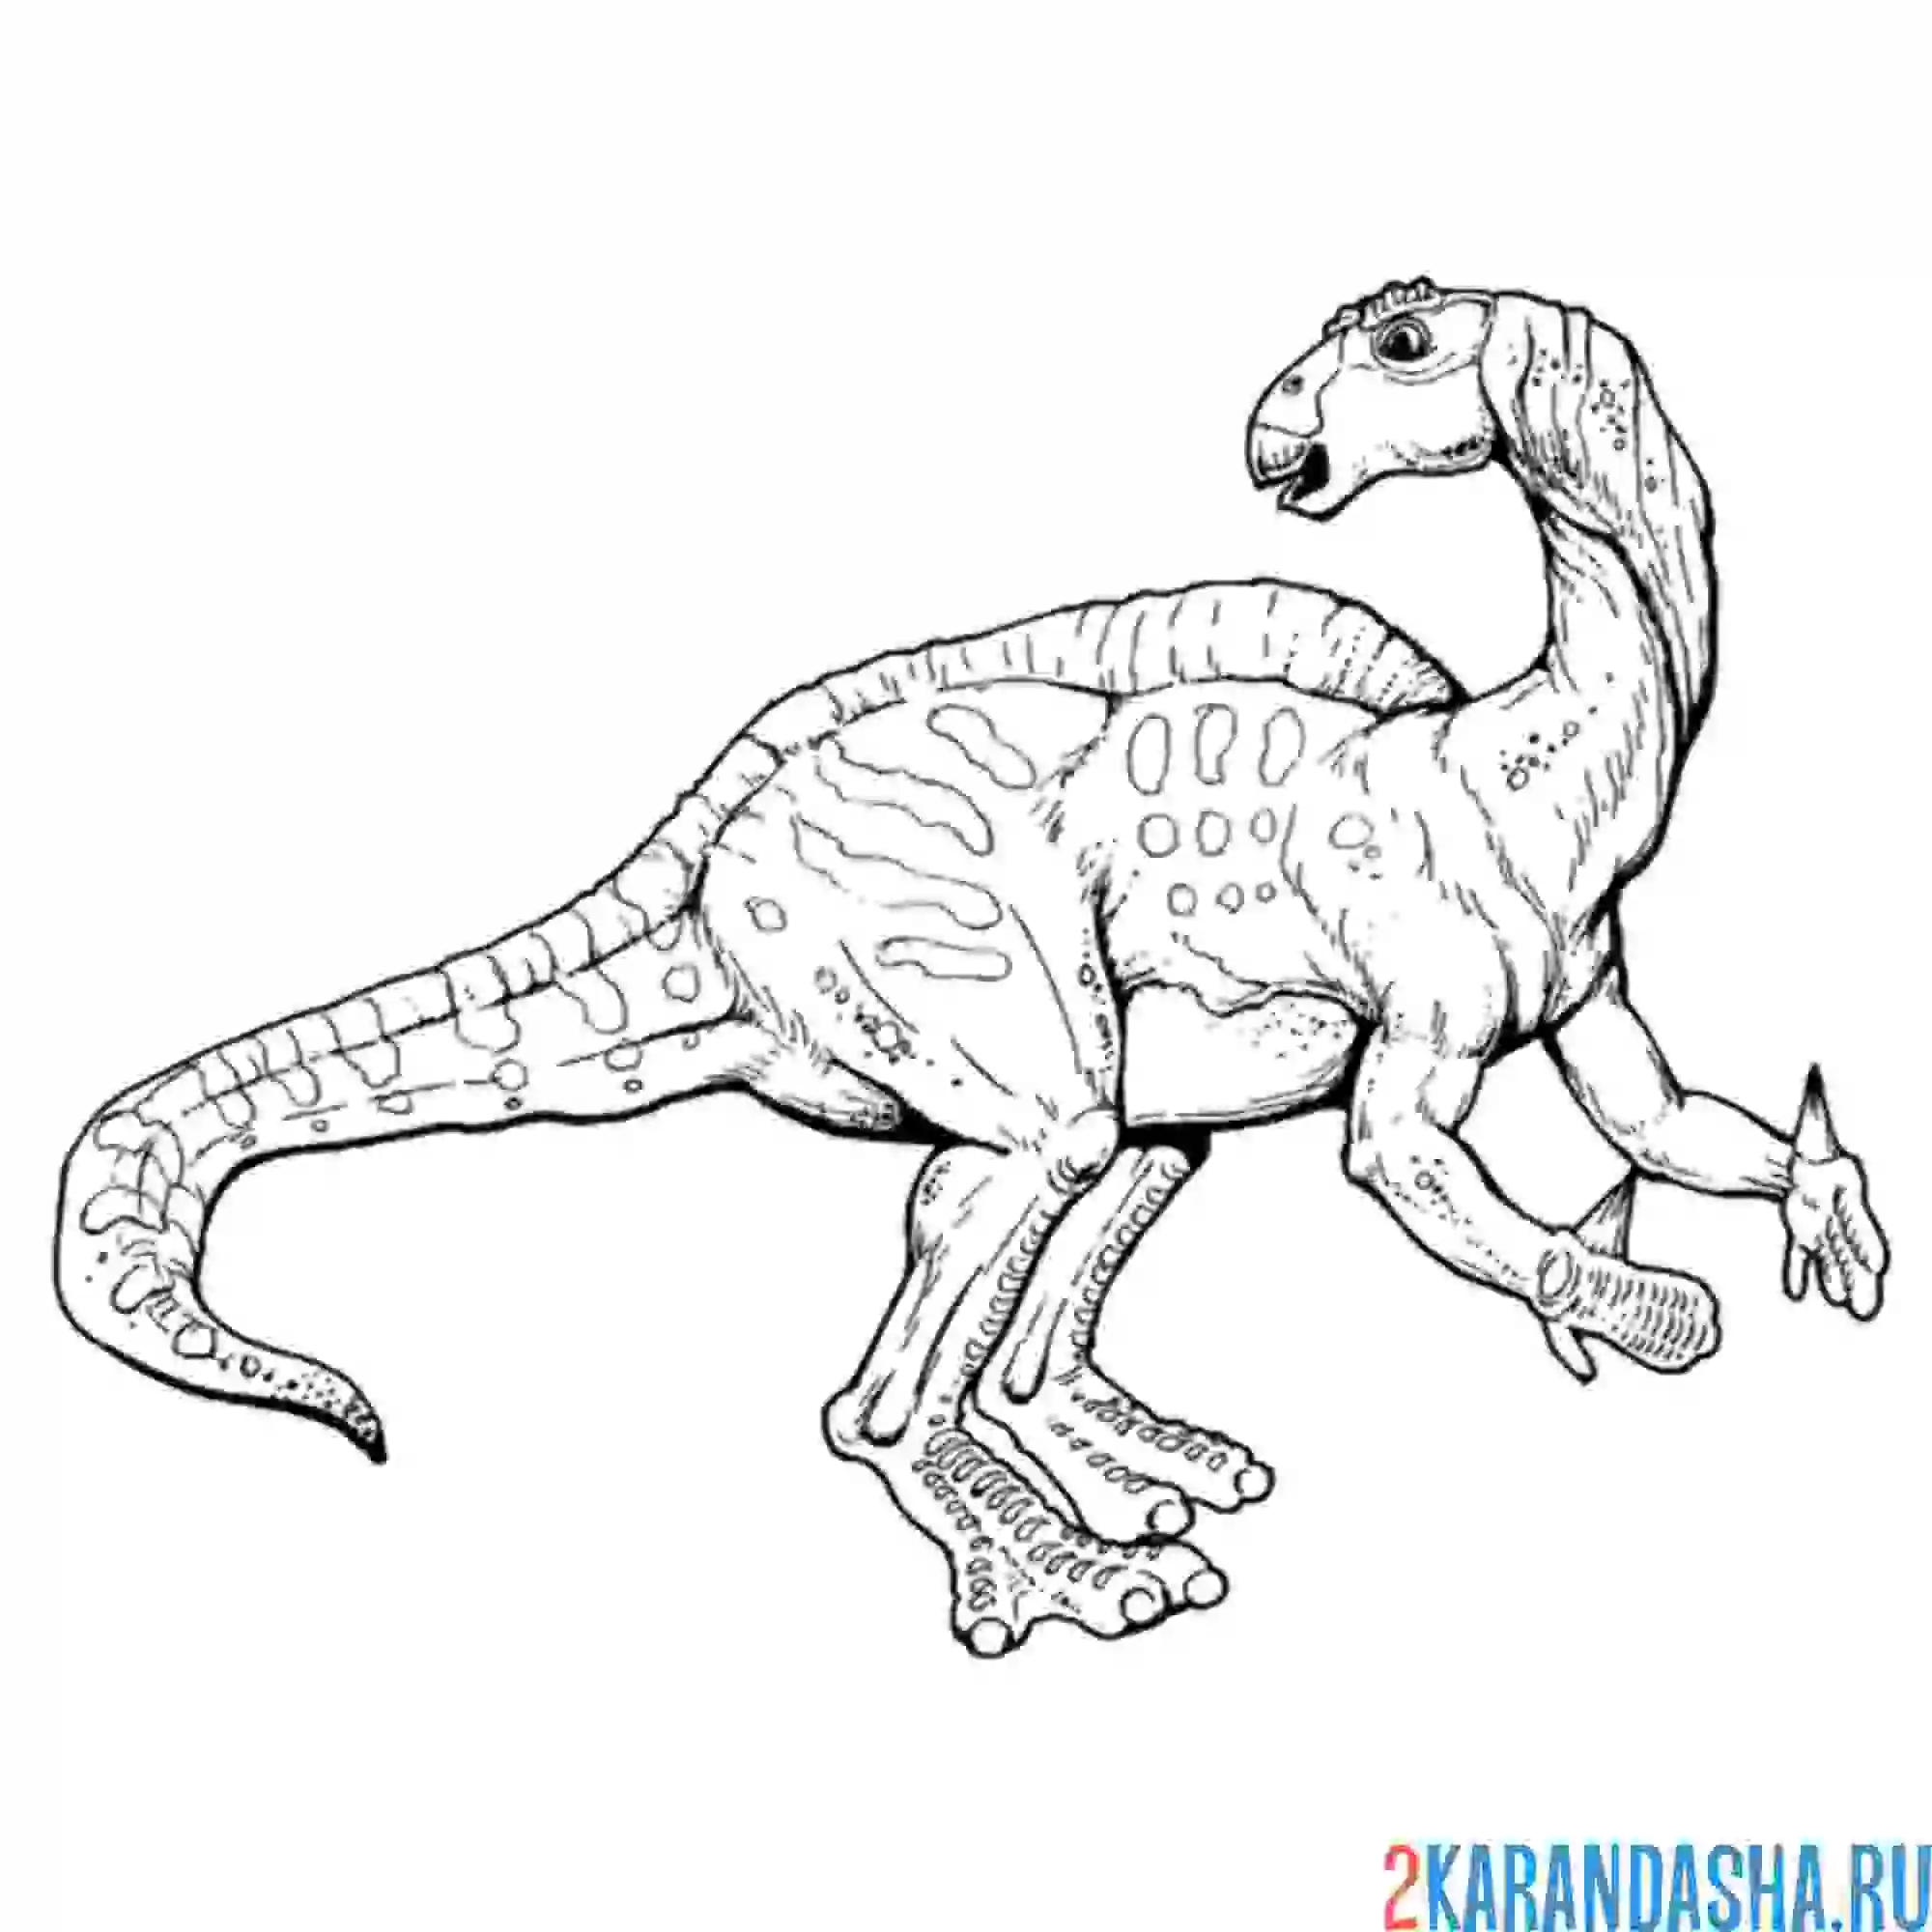 Раскраски динозавры формат а4. Тарбозавр раскраска динозавра. Игуанодон динозавр раскраска. Раскраски для детей Тарбозавр. Тарбозавр разукрашка.